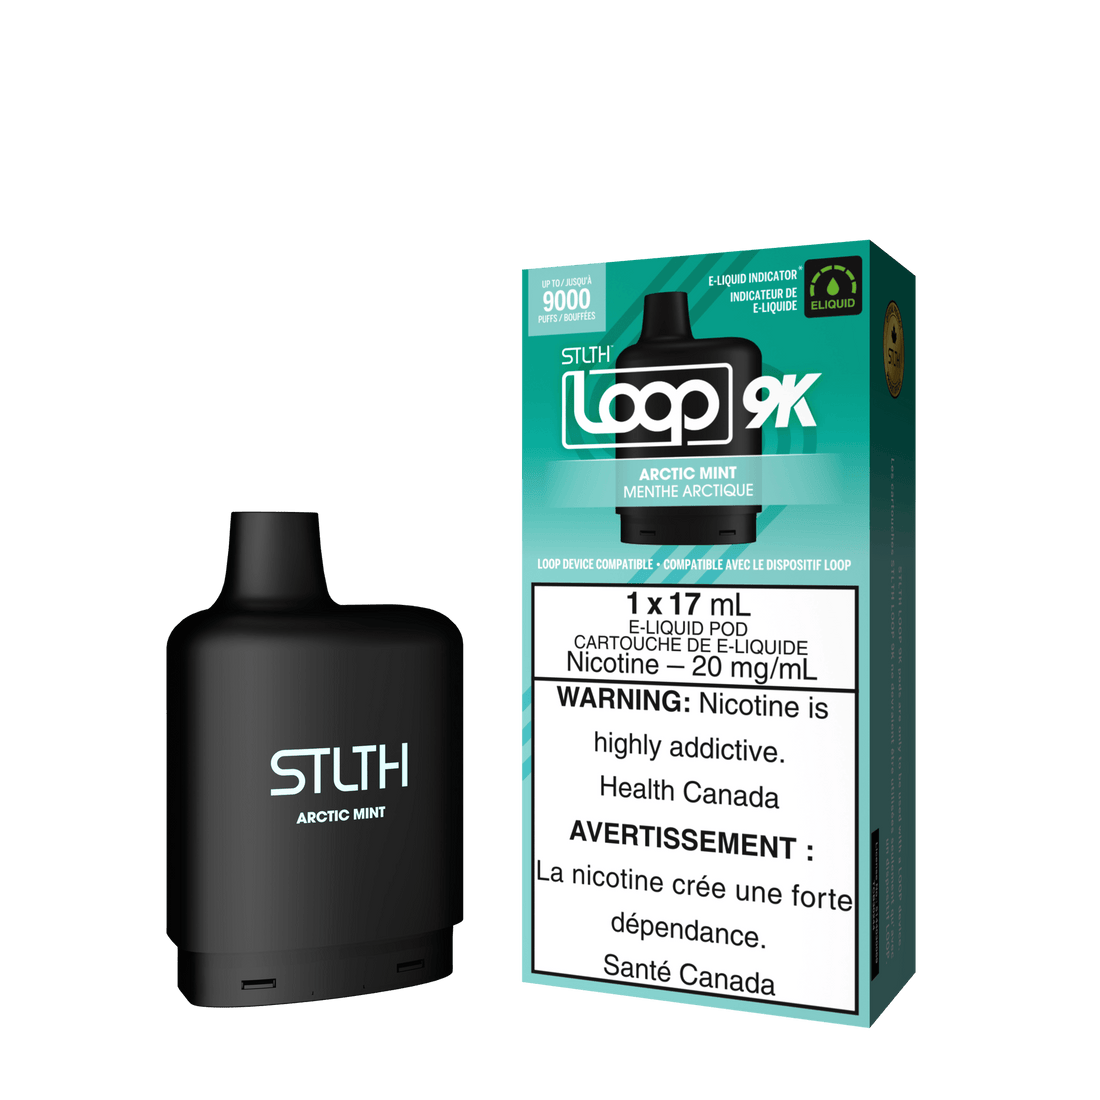 STLTH Loop 9K - Arctic Mint - Vapor Shoppe